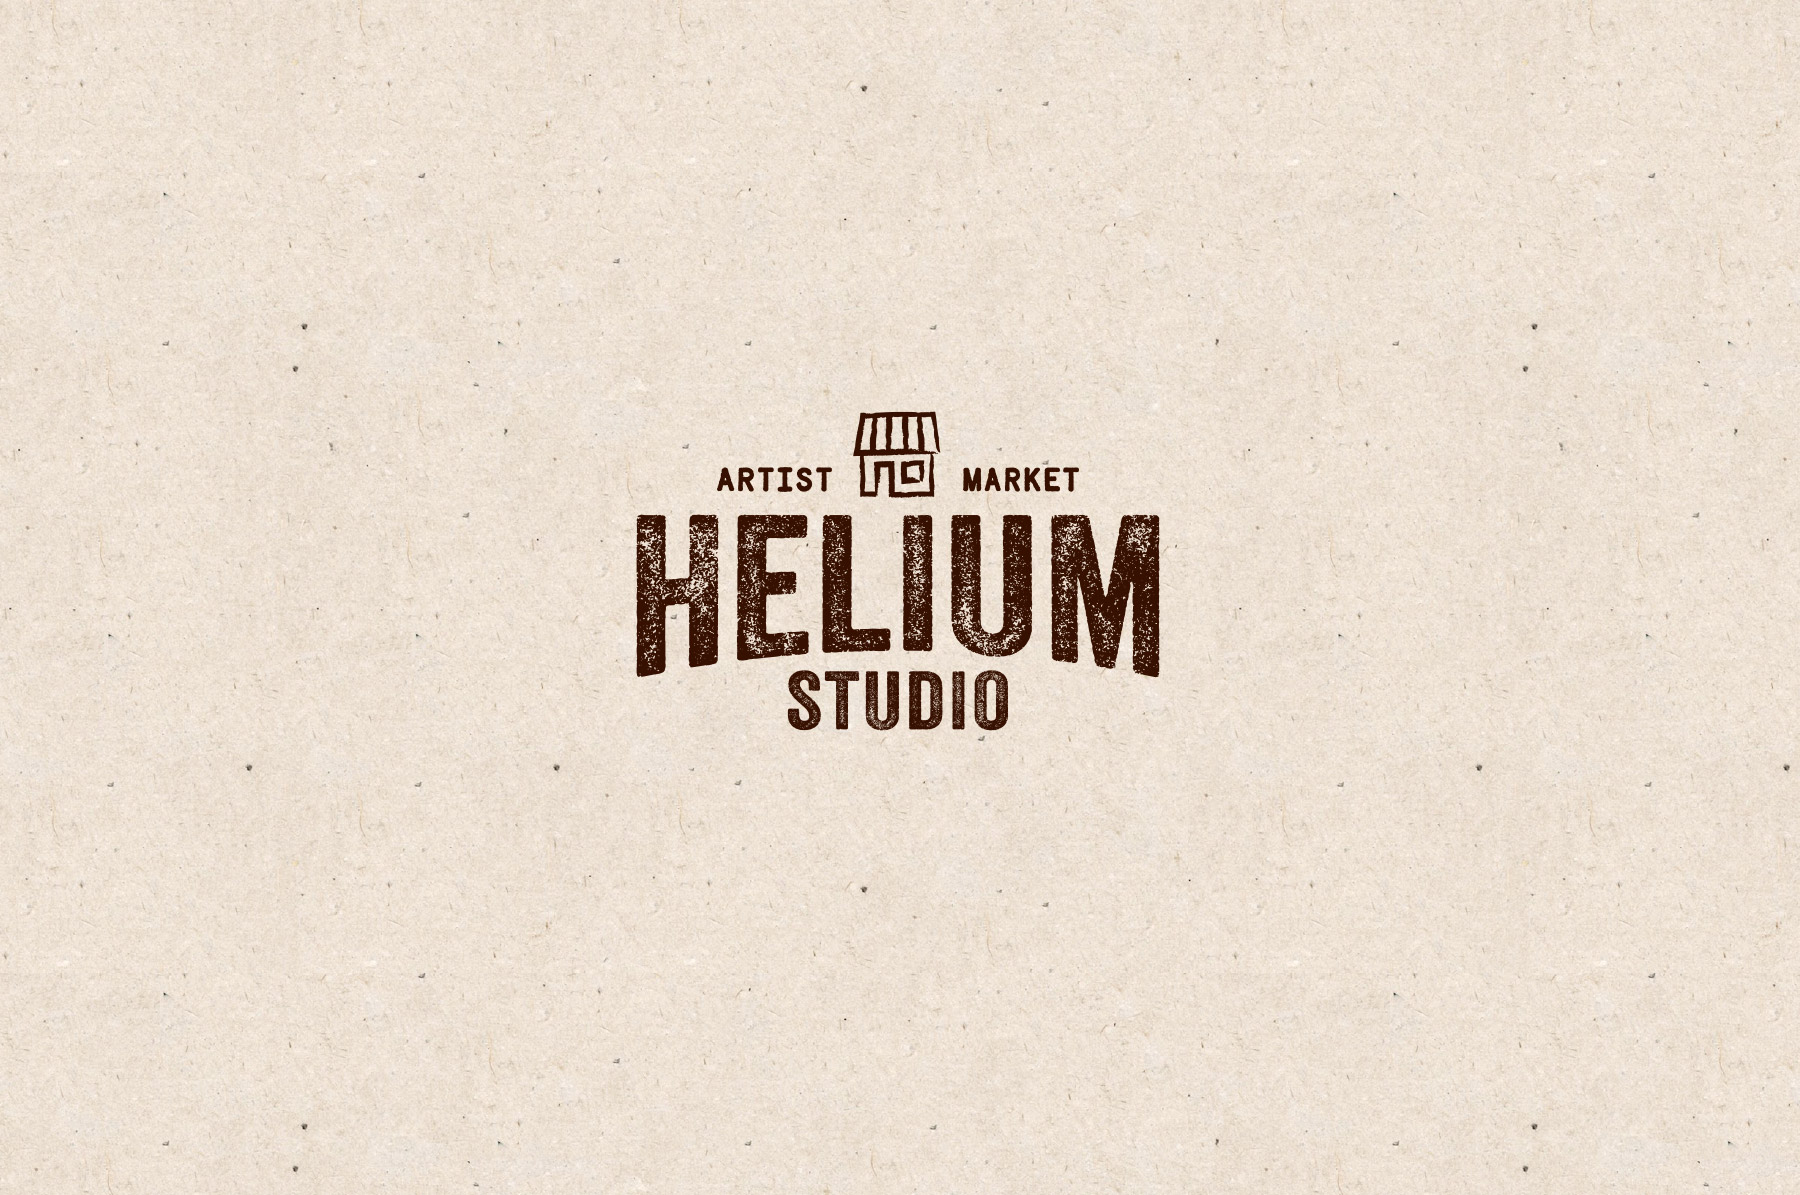 Helium Studio artist market craft logo